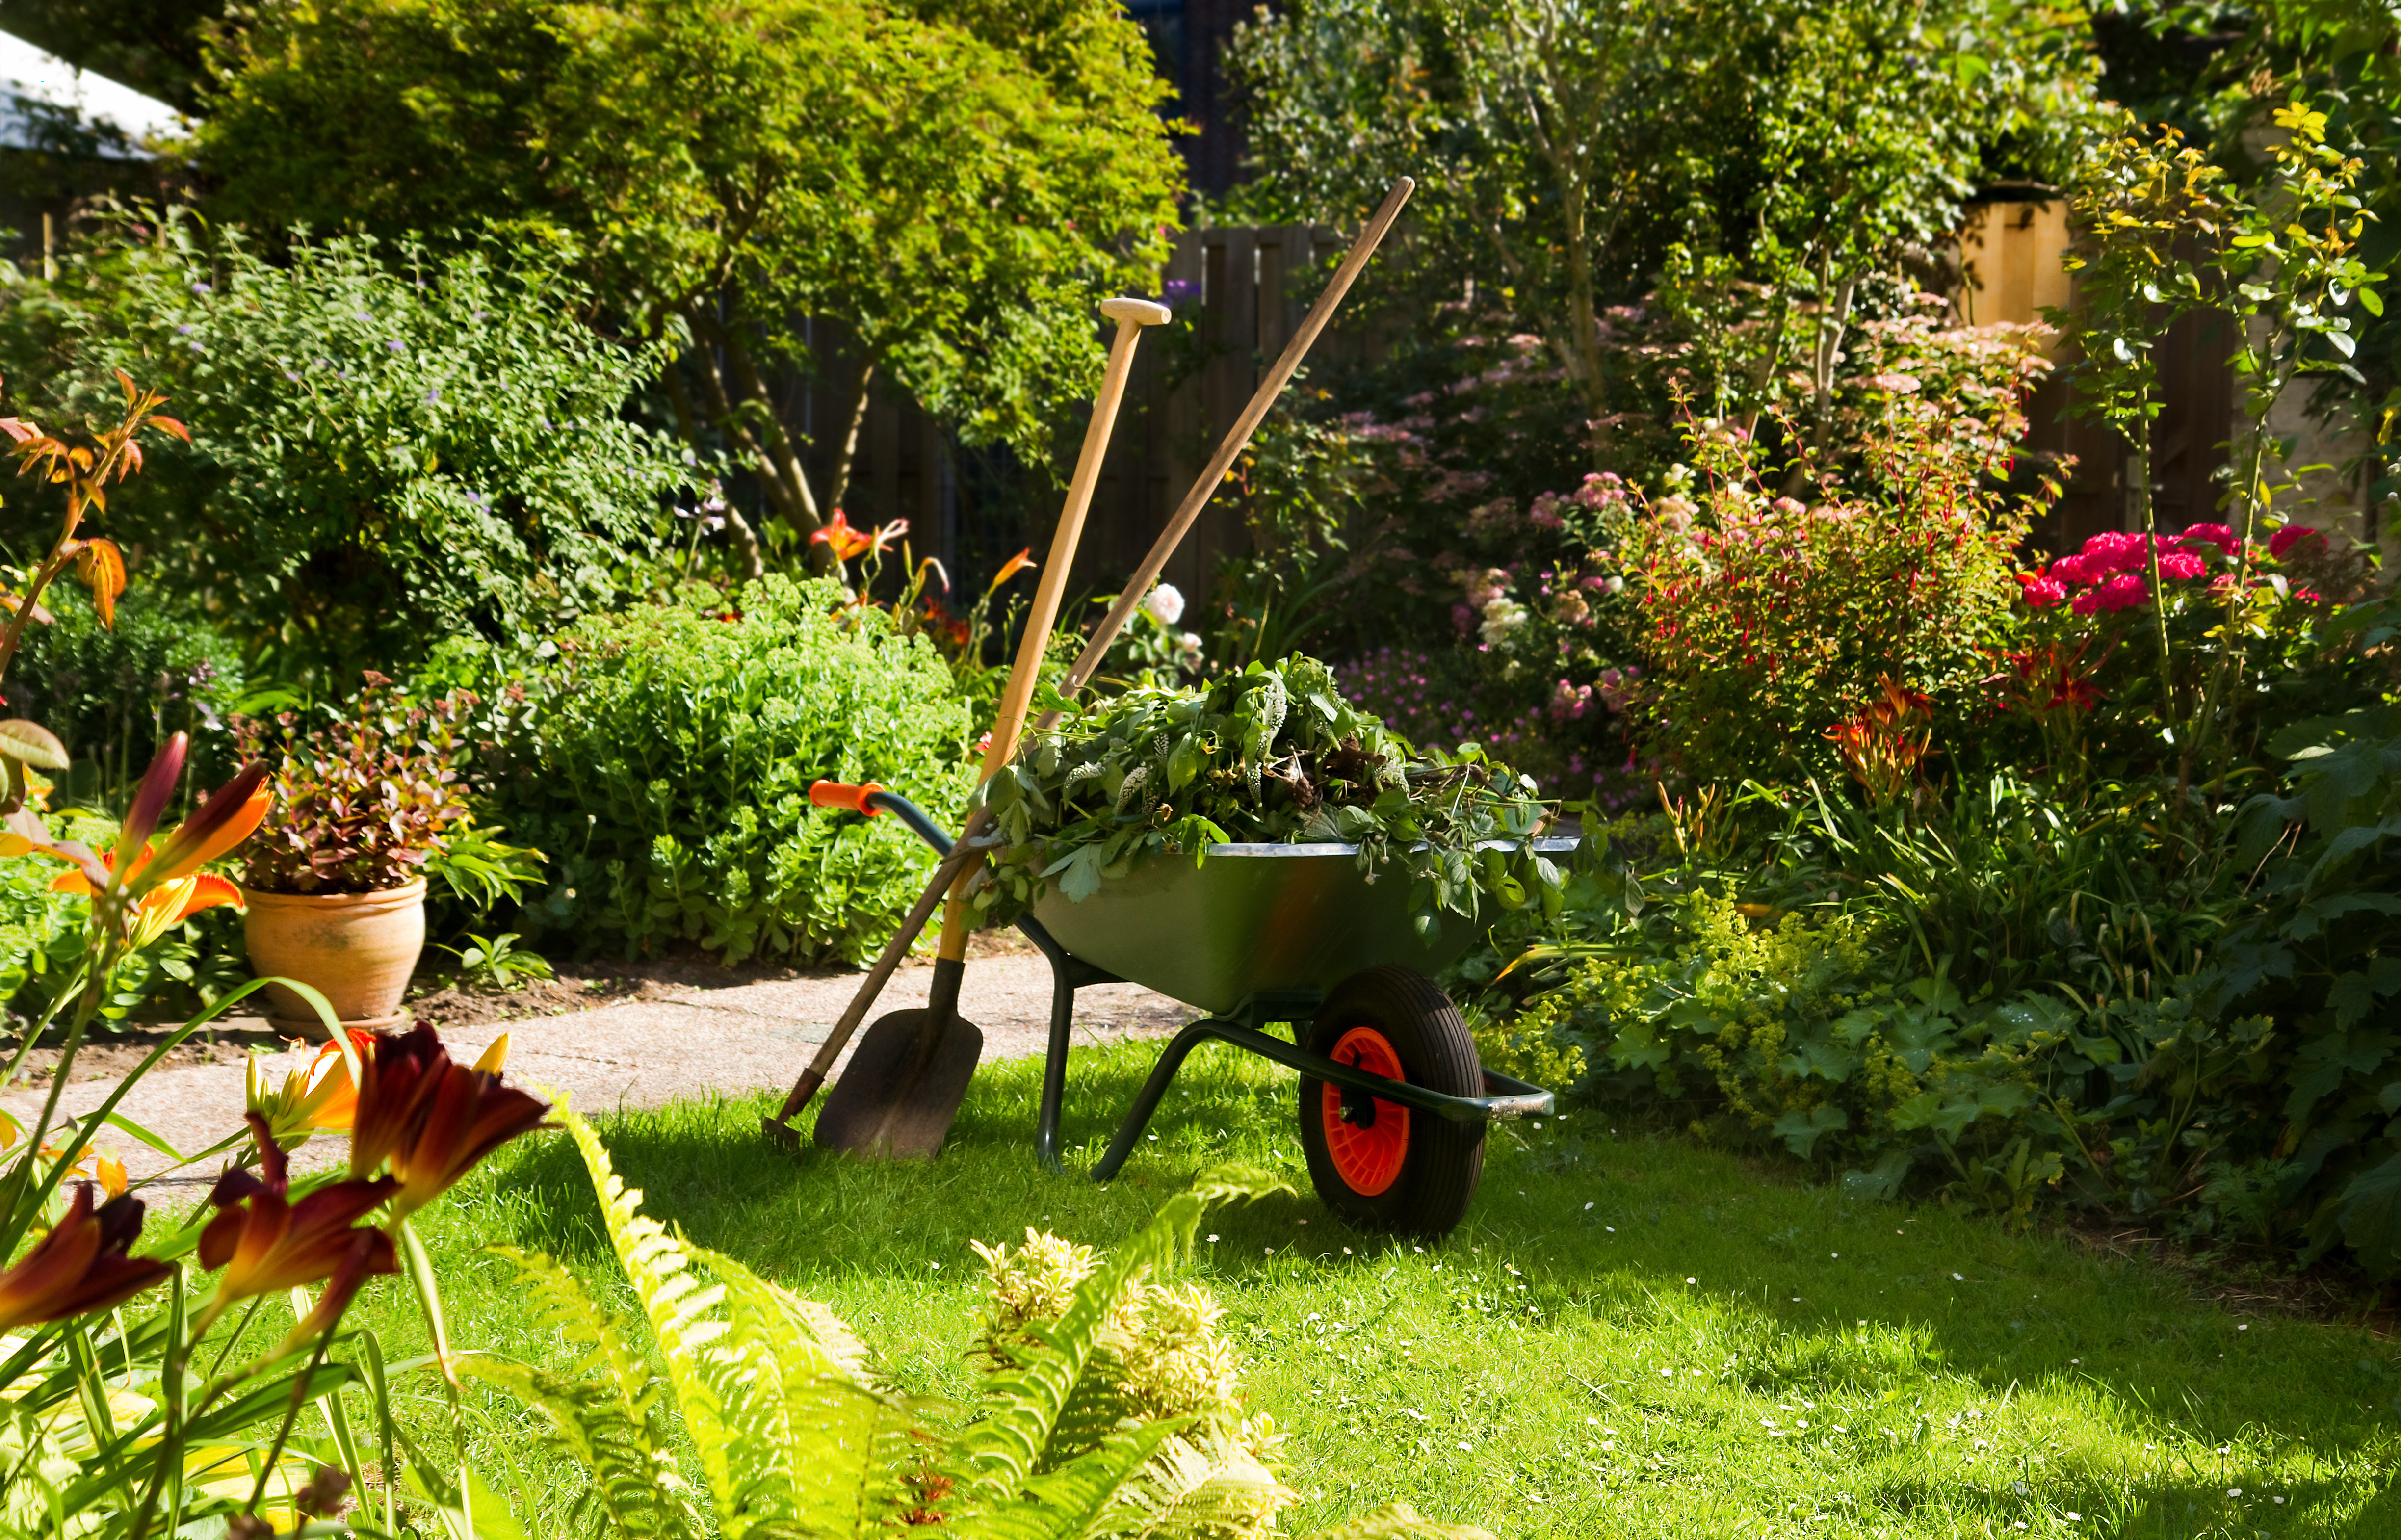 Working with wheelbarrow in the garden